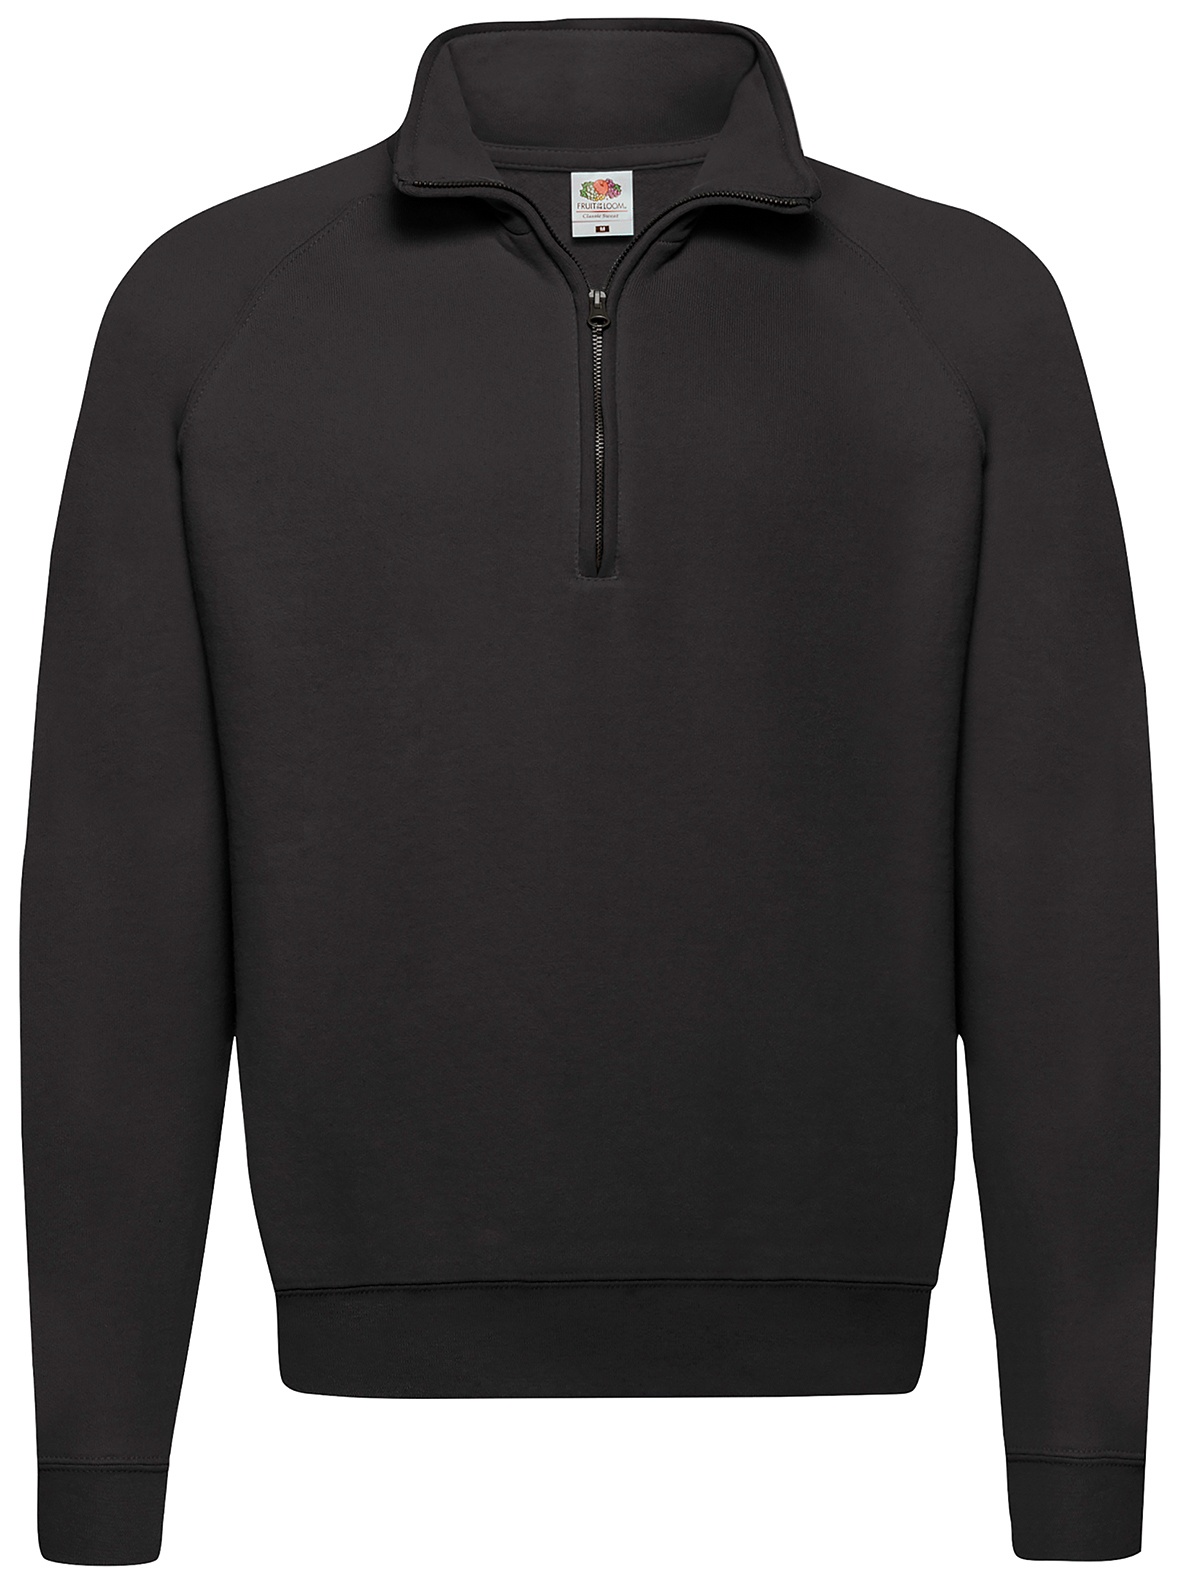 CLASSIC ZIP NECK SWEAT - Herren Sweatshirt mit Reißverschluss, schwarz, M